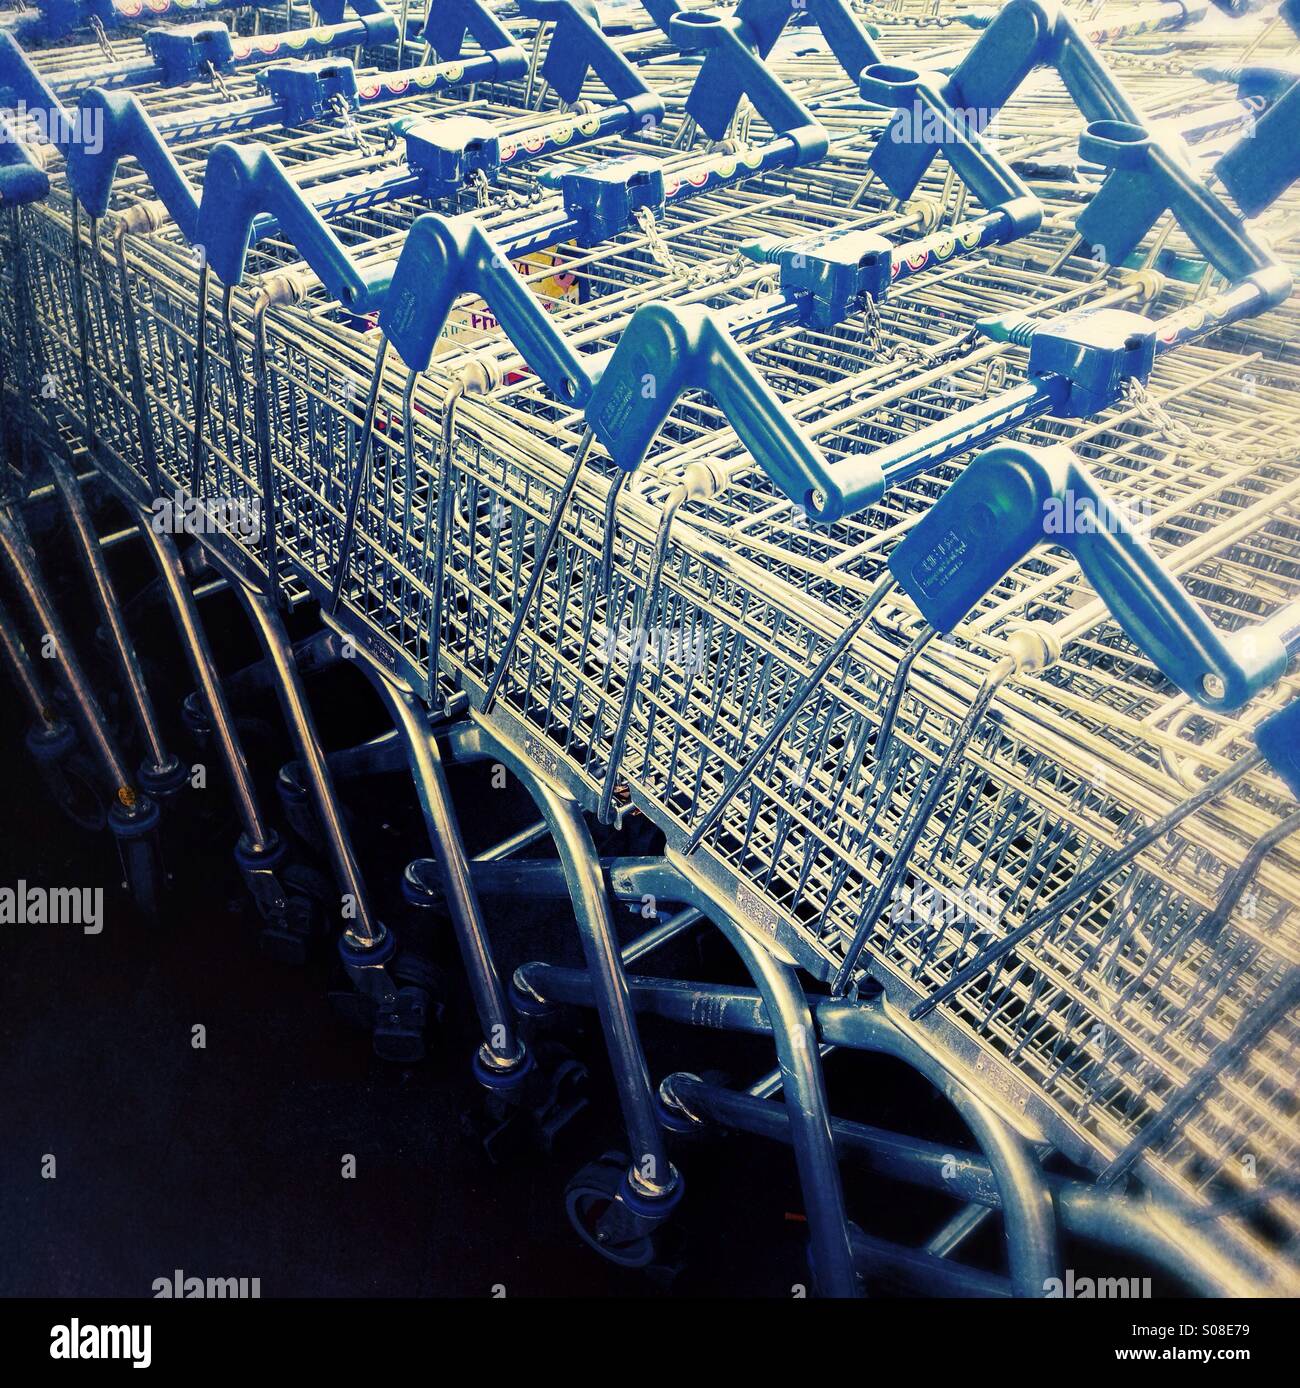 Shopping trolleys - supermarket trolleys Stock Photo